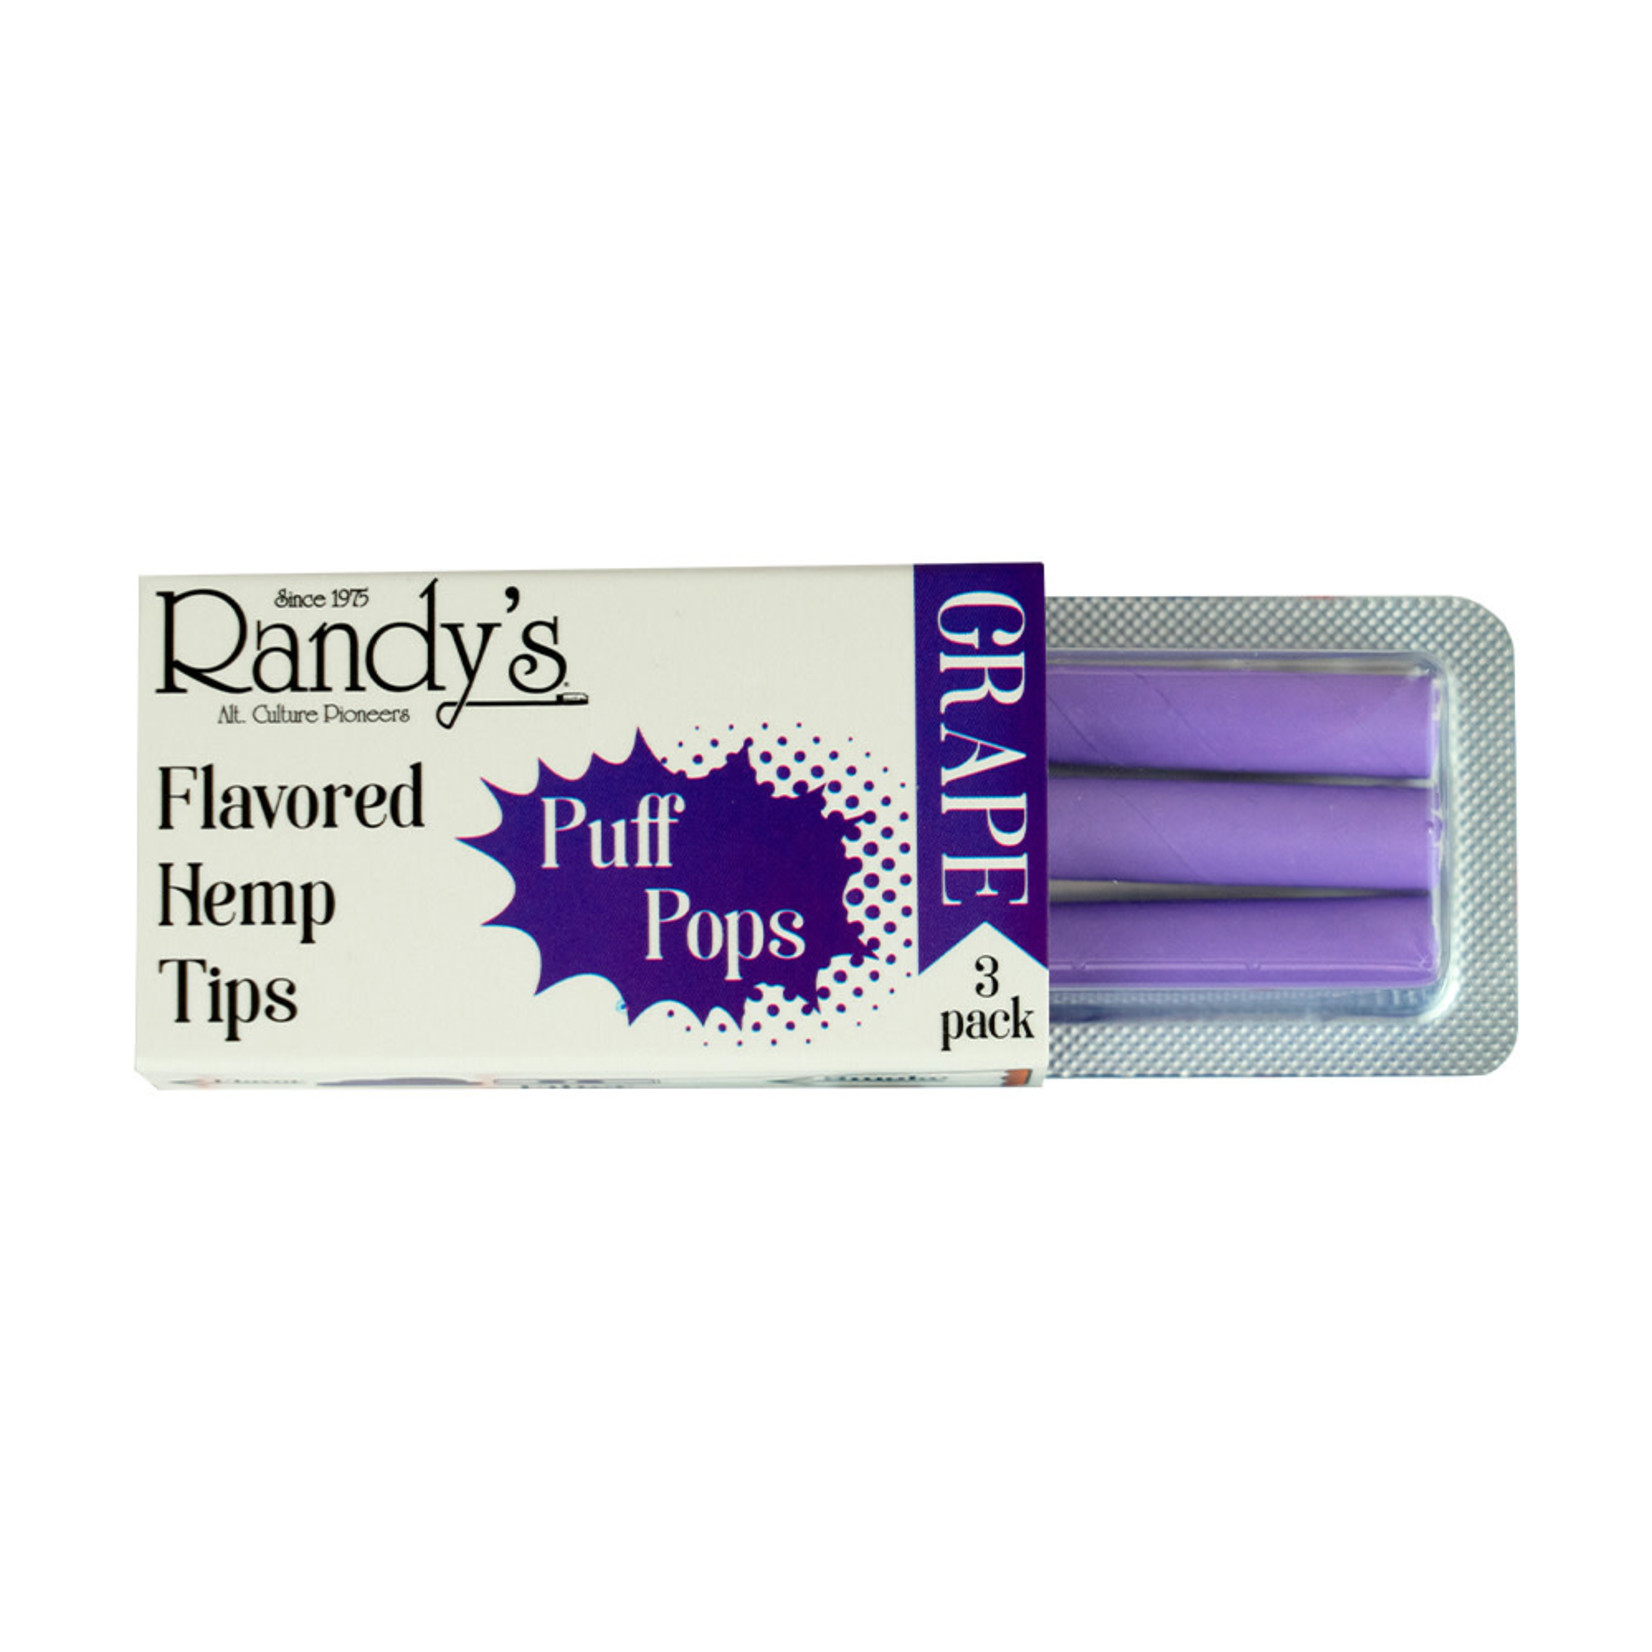 Randy's Randy's Puff Pops - Flavored Hemp Tips